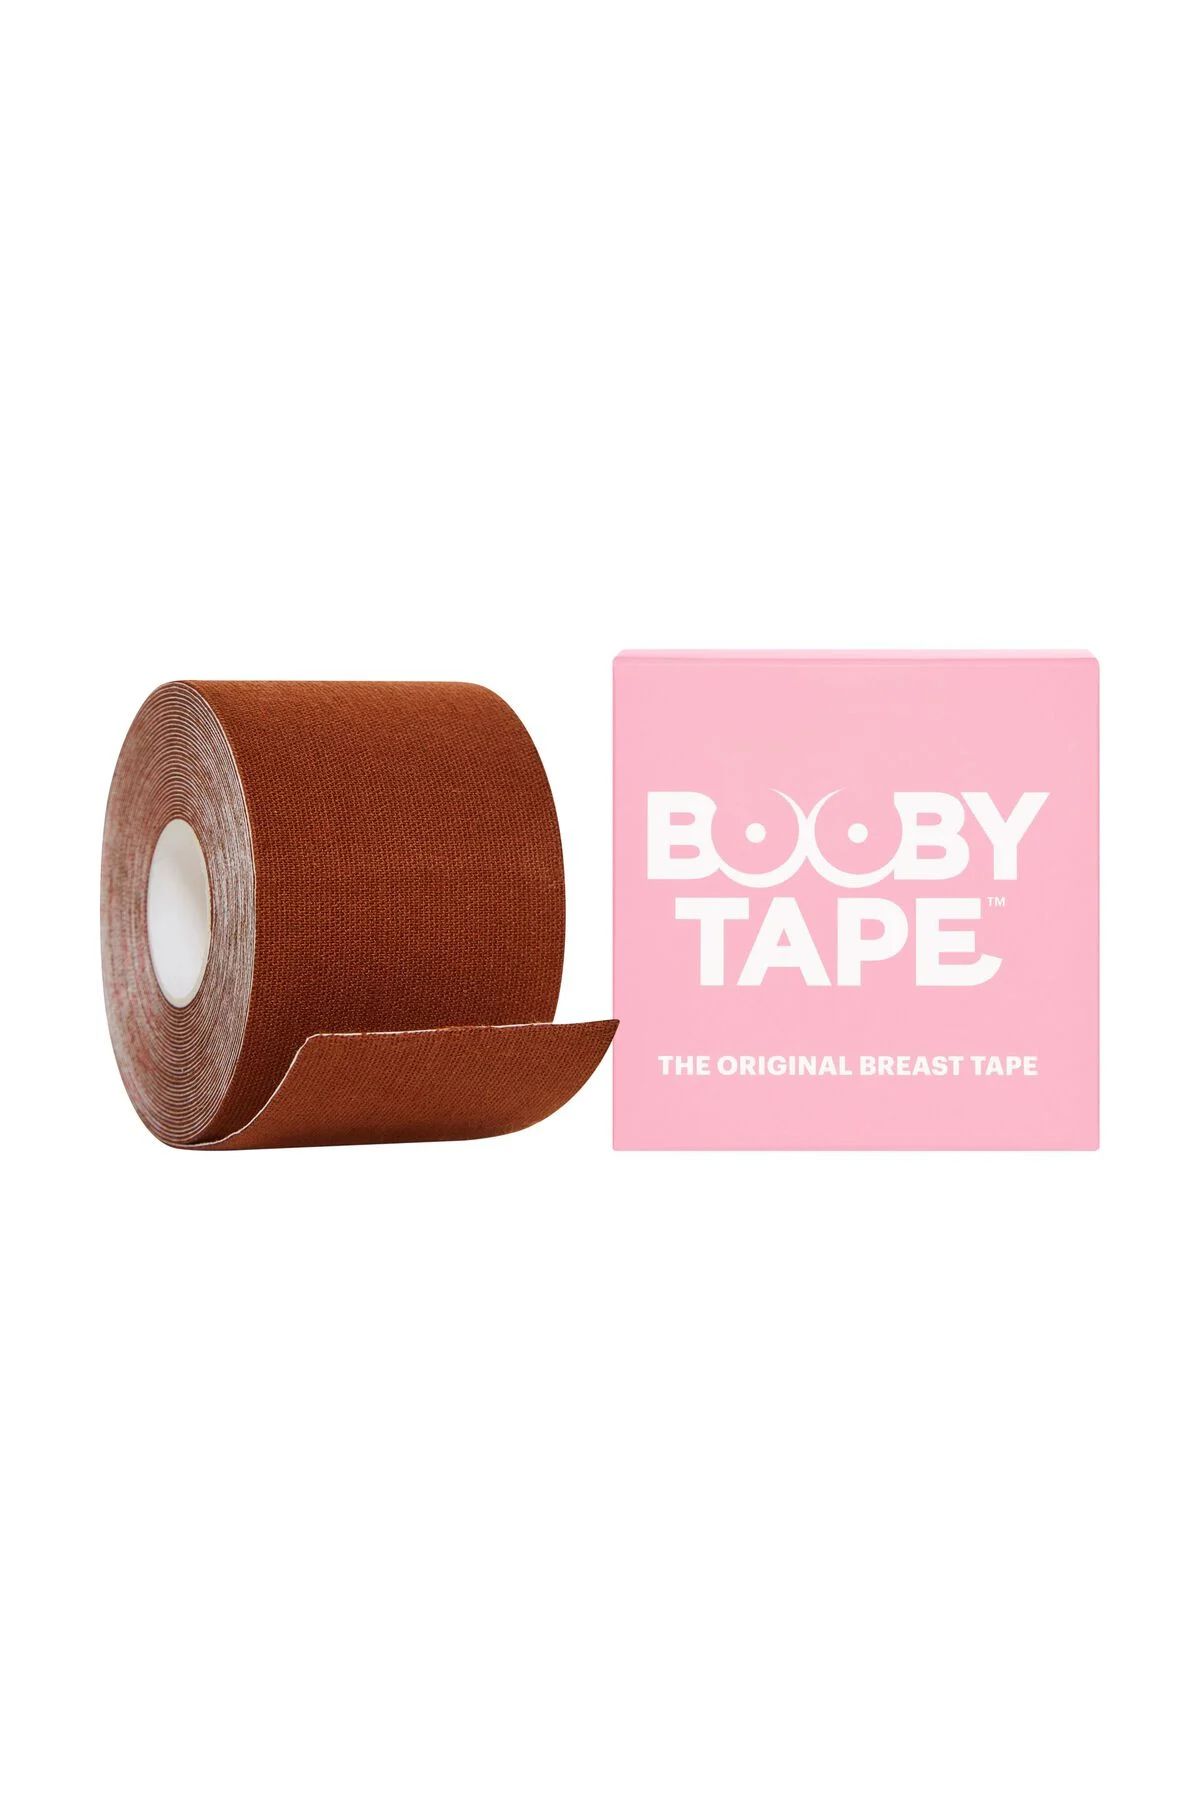 BOOBY TAPE, Breast Tape Black